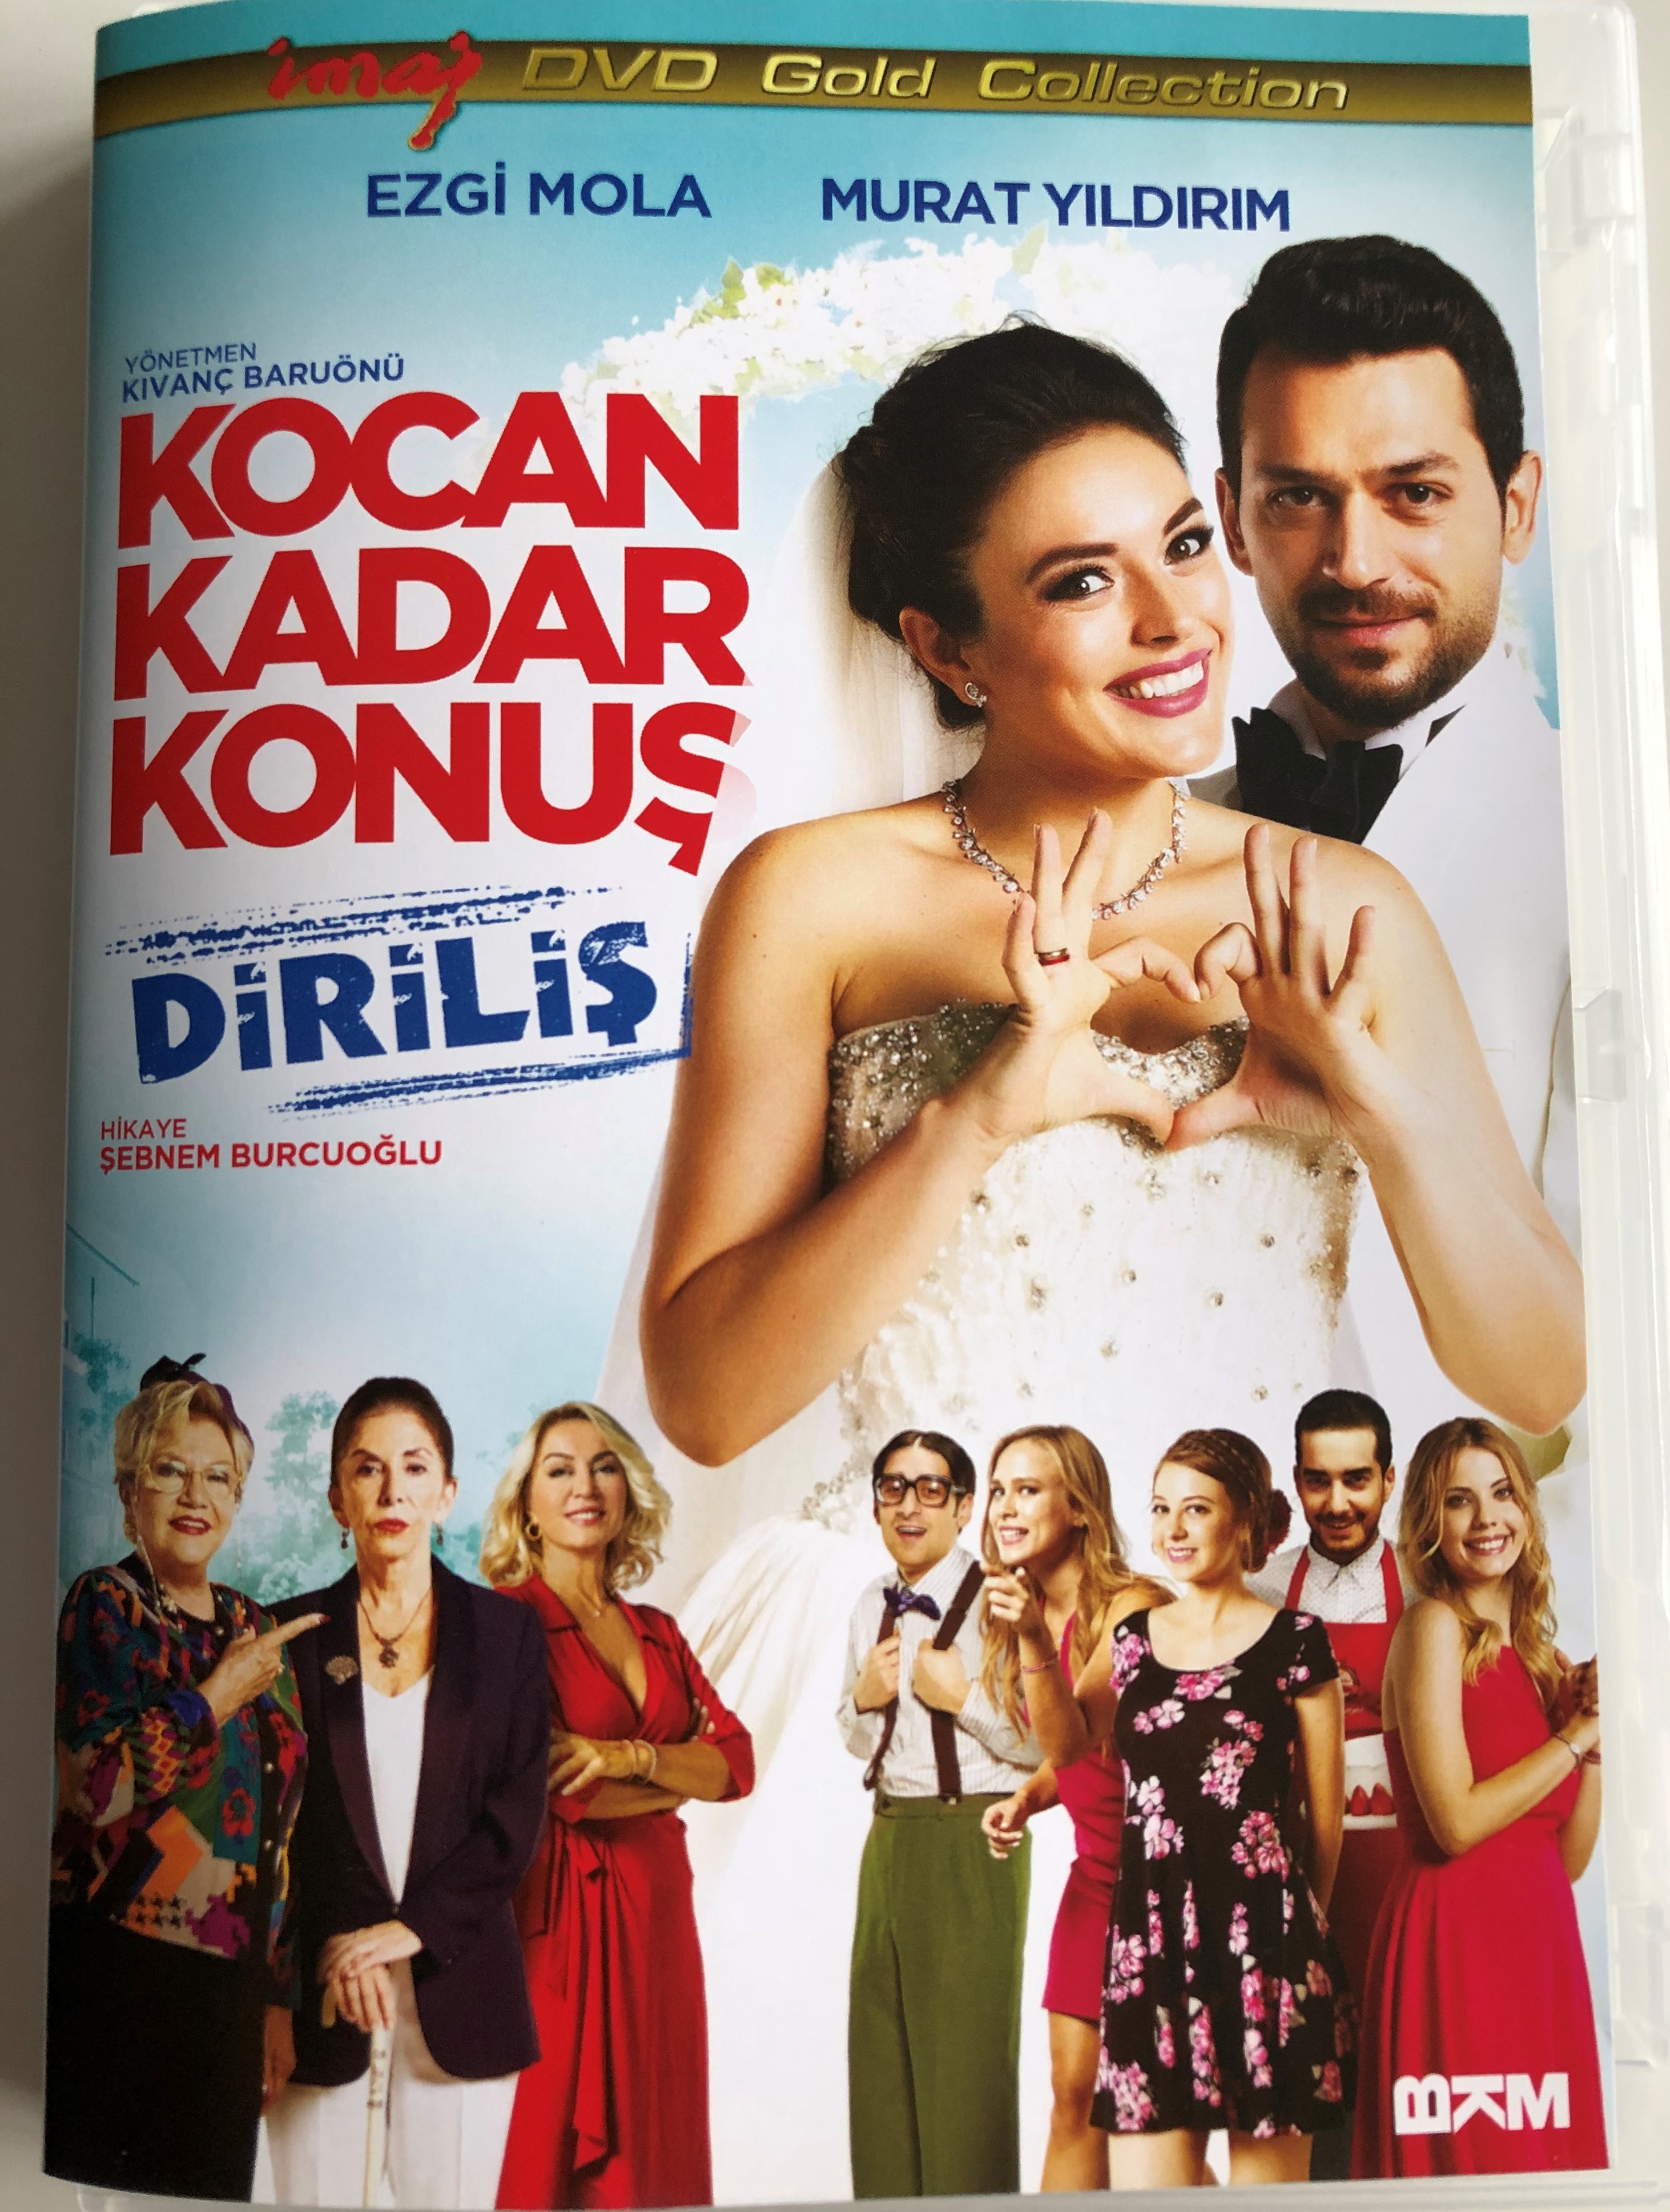 kocan-kadar-konus-dvd-2015-husband-factor-directed-by-kivan-baru-n-starring-ezgi-mola-murat-y-ld-r-m-1-.jpg